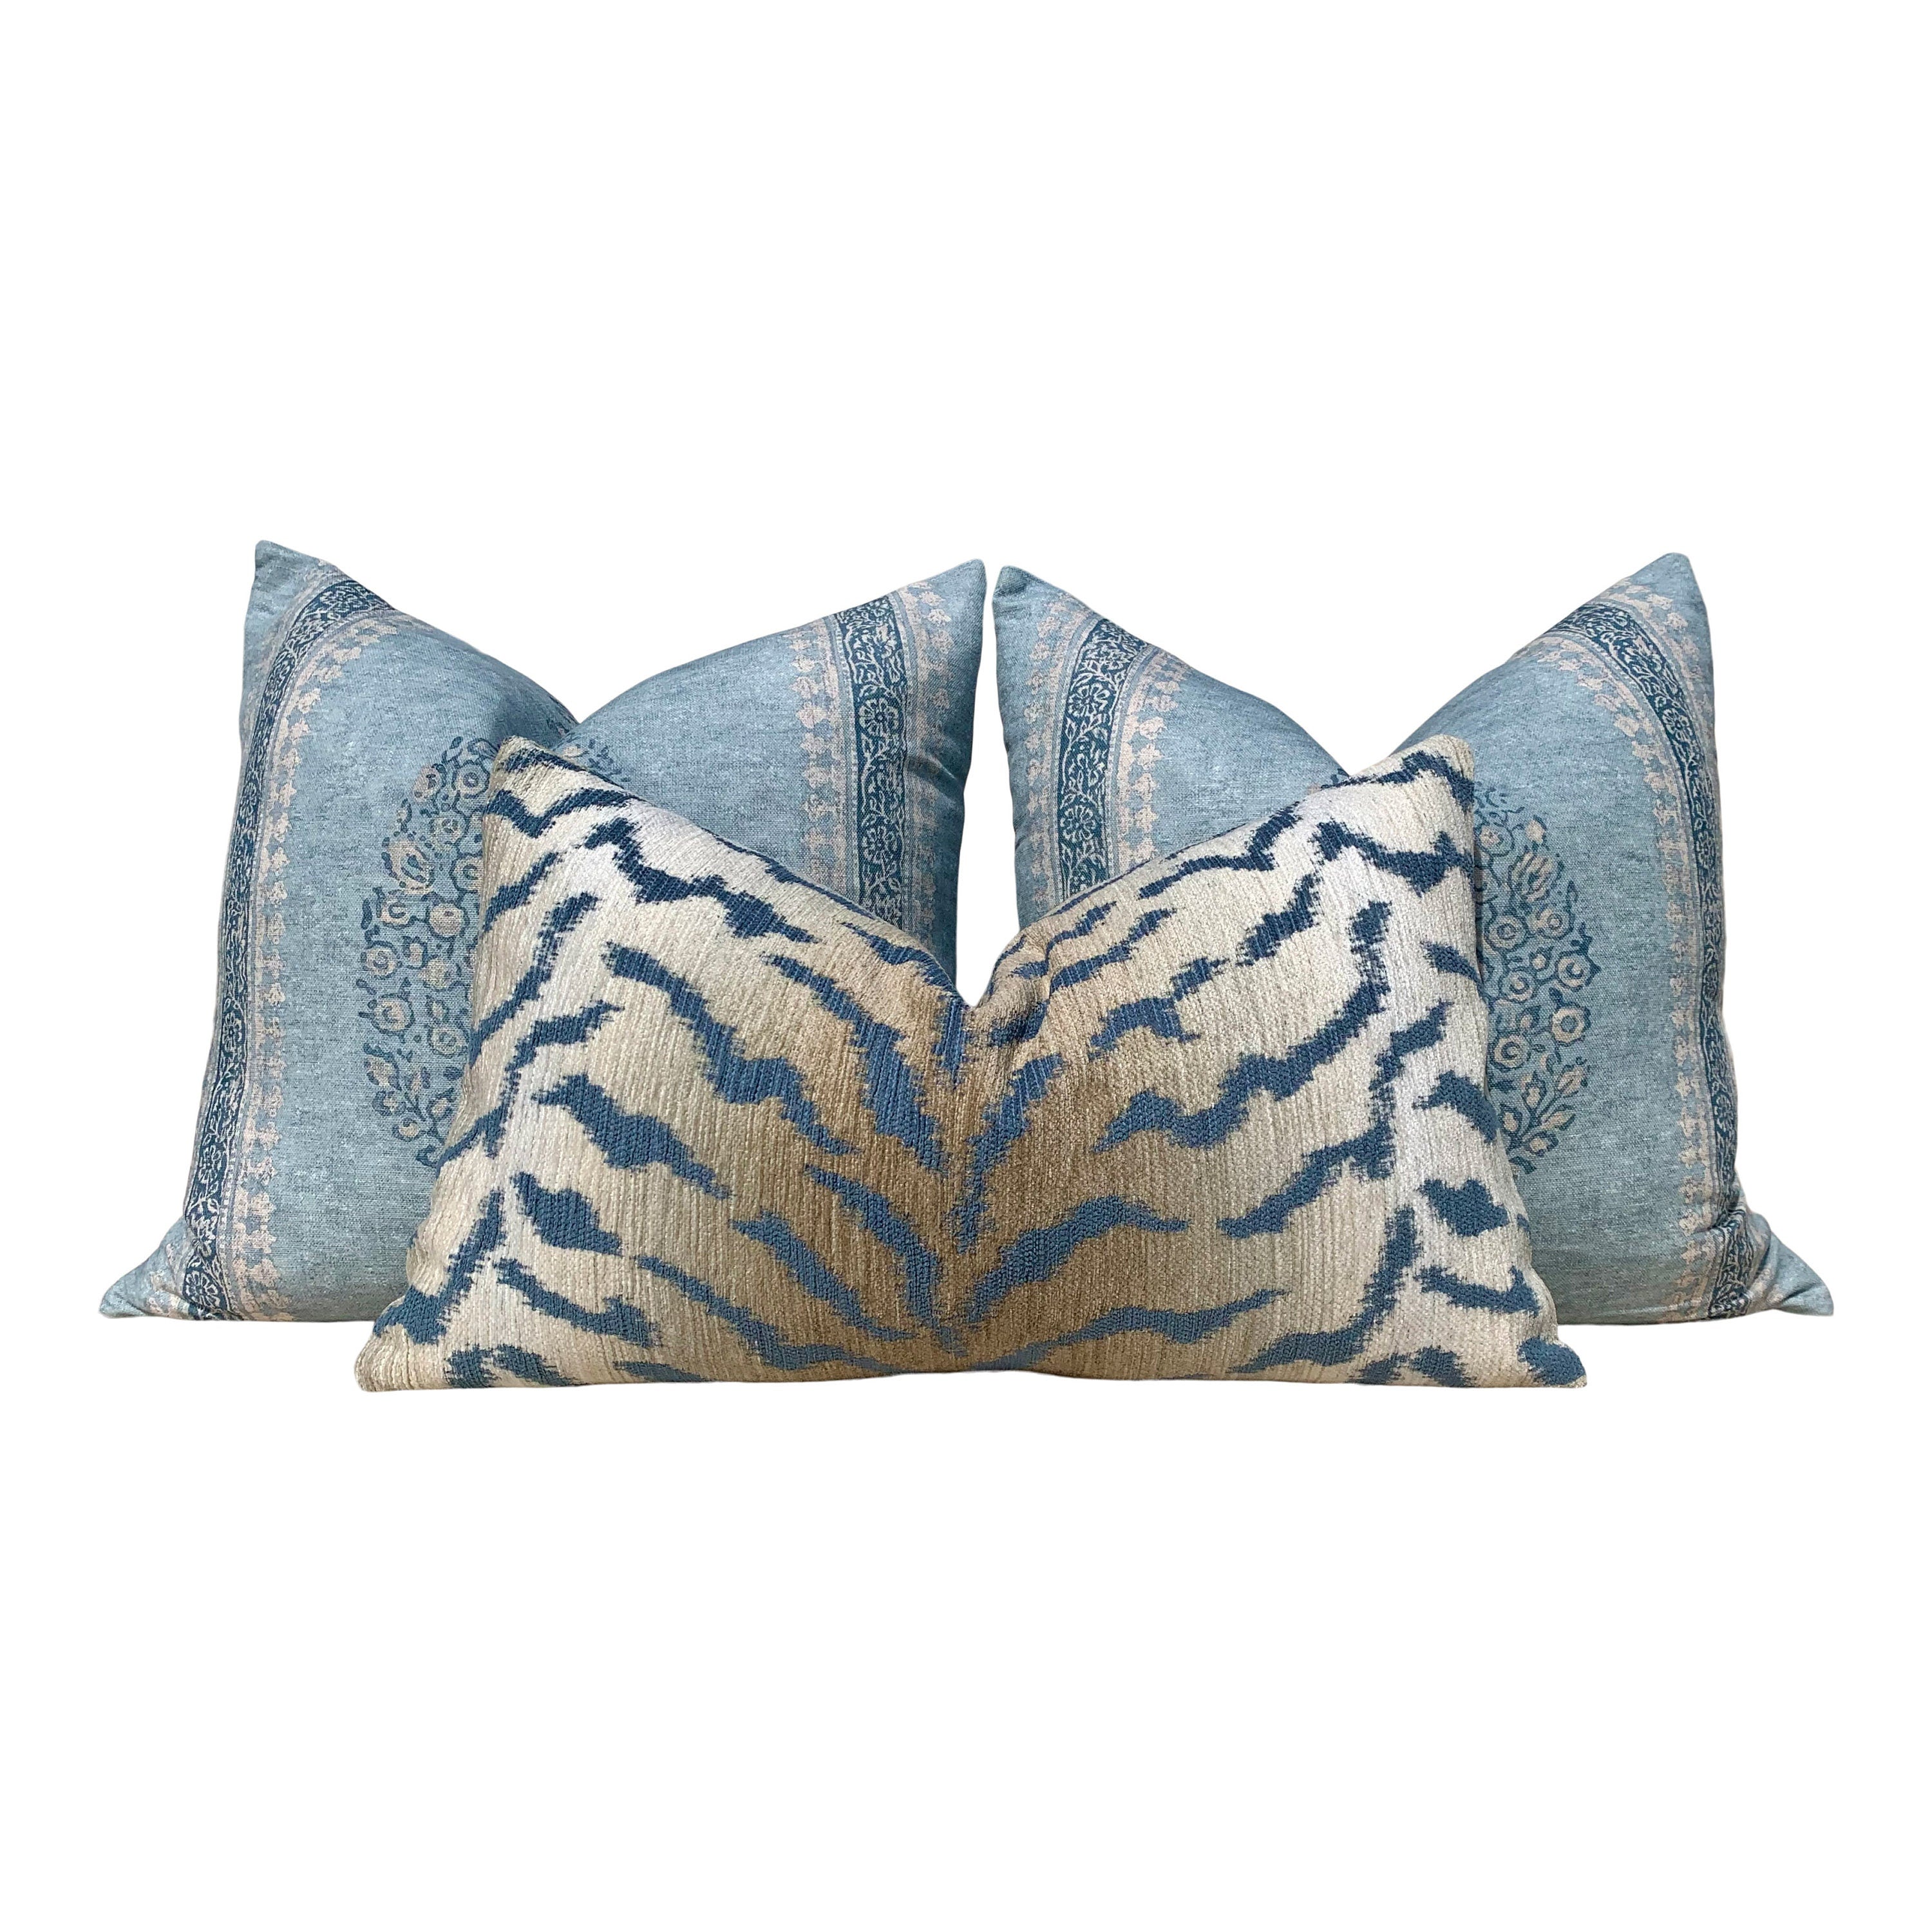 Chappana Medallion Pillow in Antique Blue. Medallion Blue pillows // Accent cushion cover //  Decorative pillow // Euro Sham Pillow